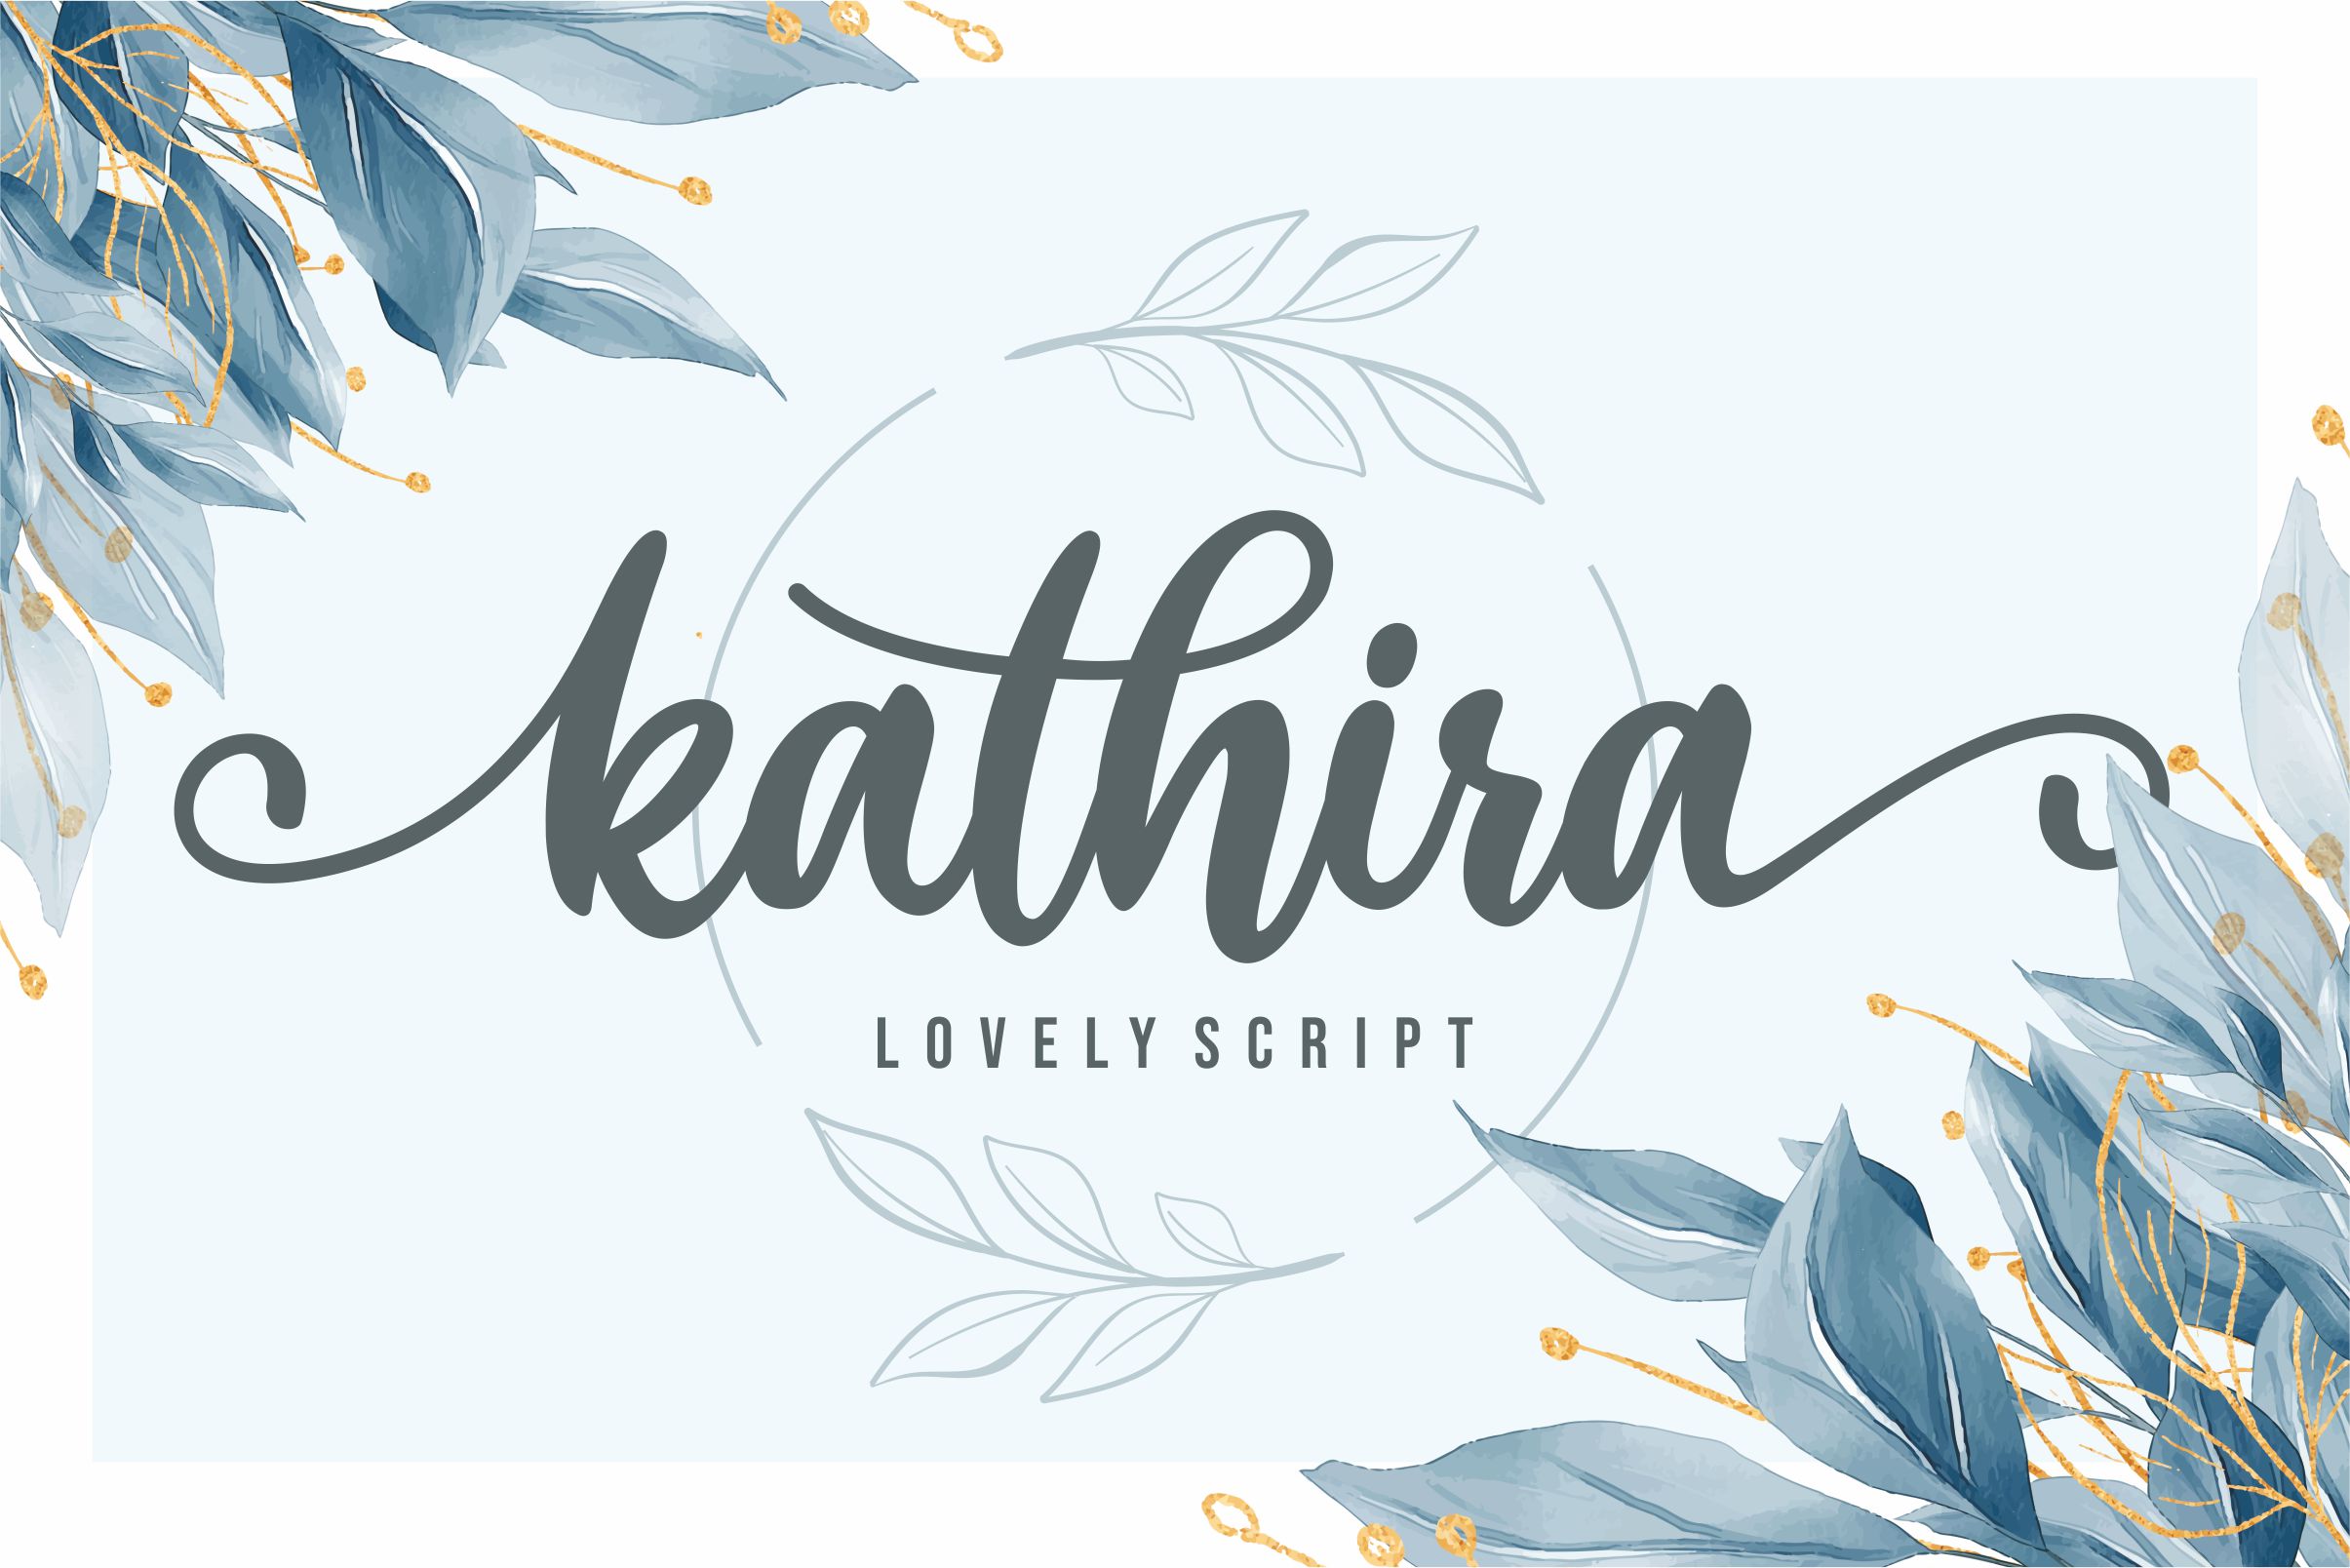 Kathira Free Font